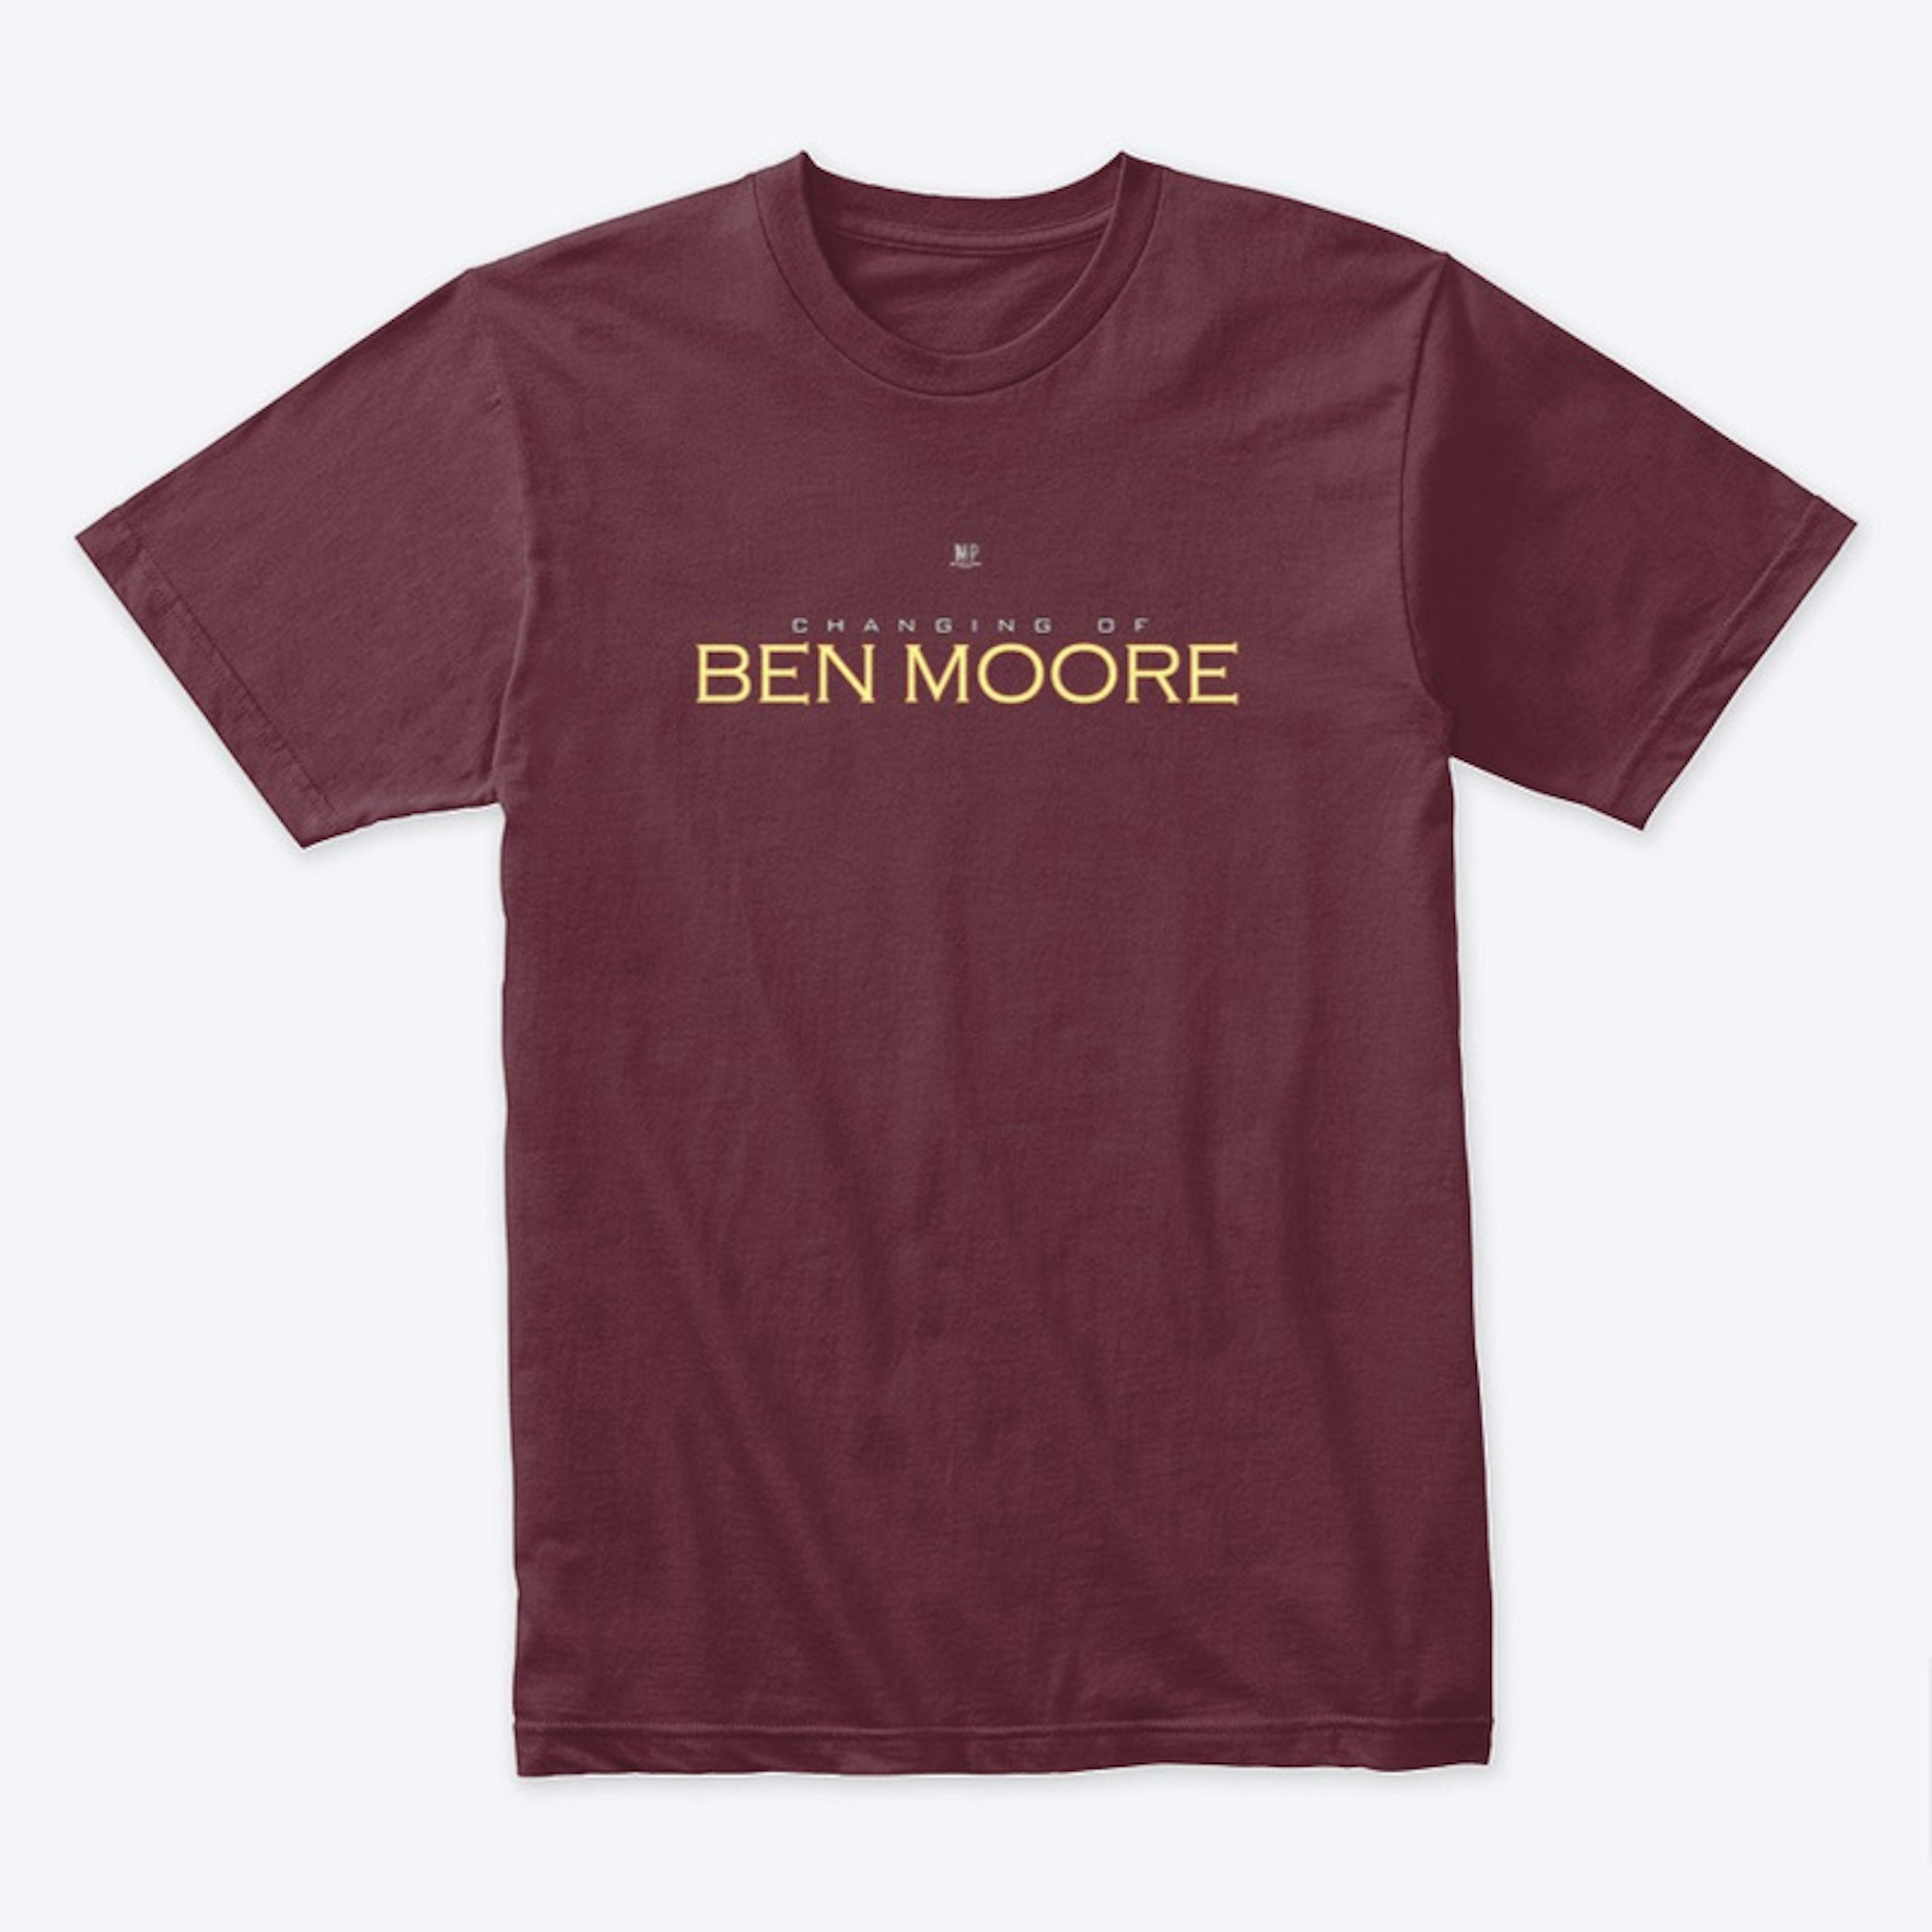 Changing of Ben Moore T-shirt